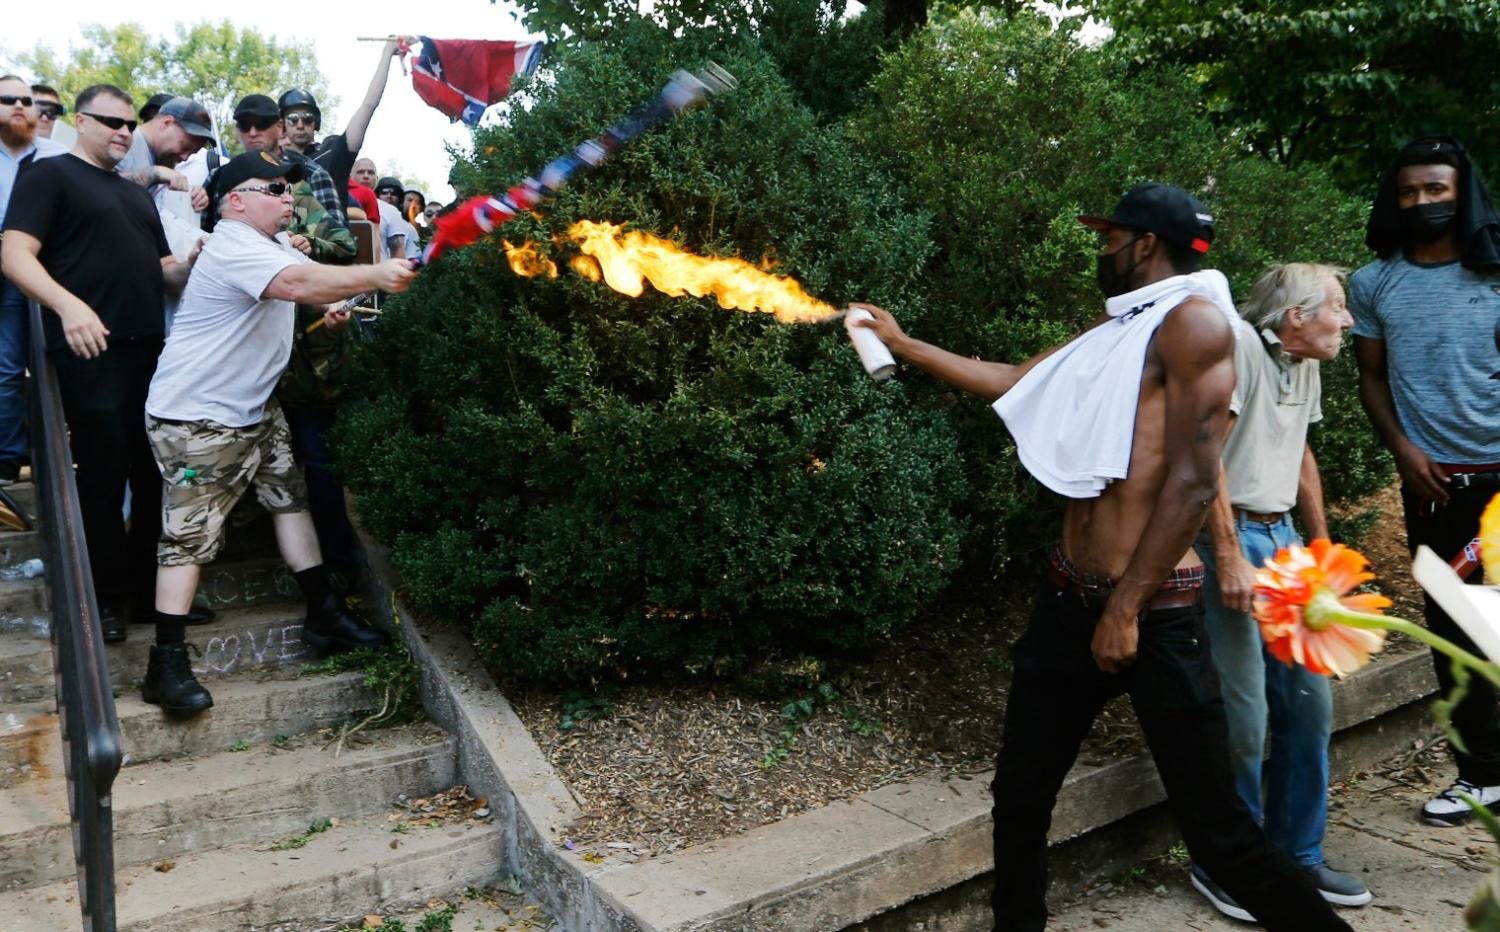 Protestors clashing in Charlottesville, Virginia.